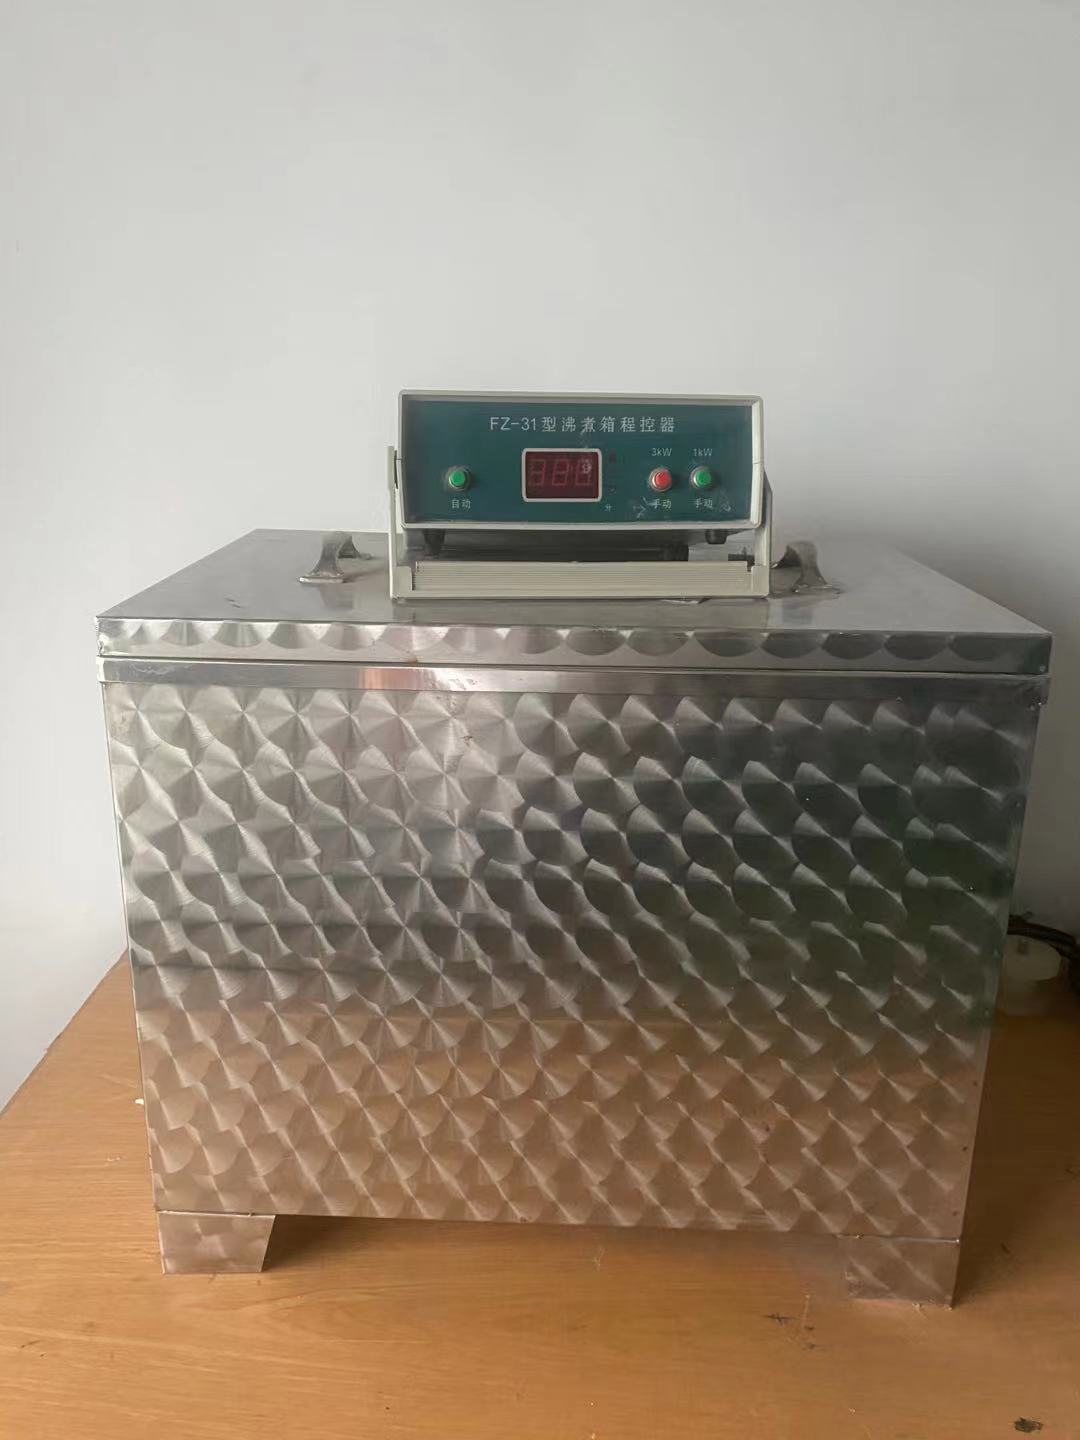 FZ-31型沸煮箱程控器